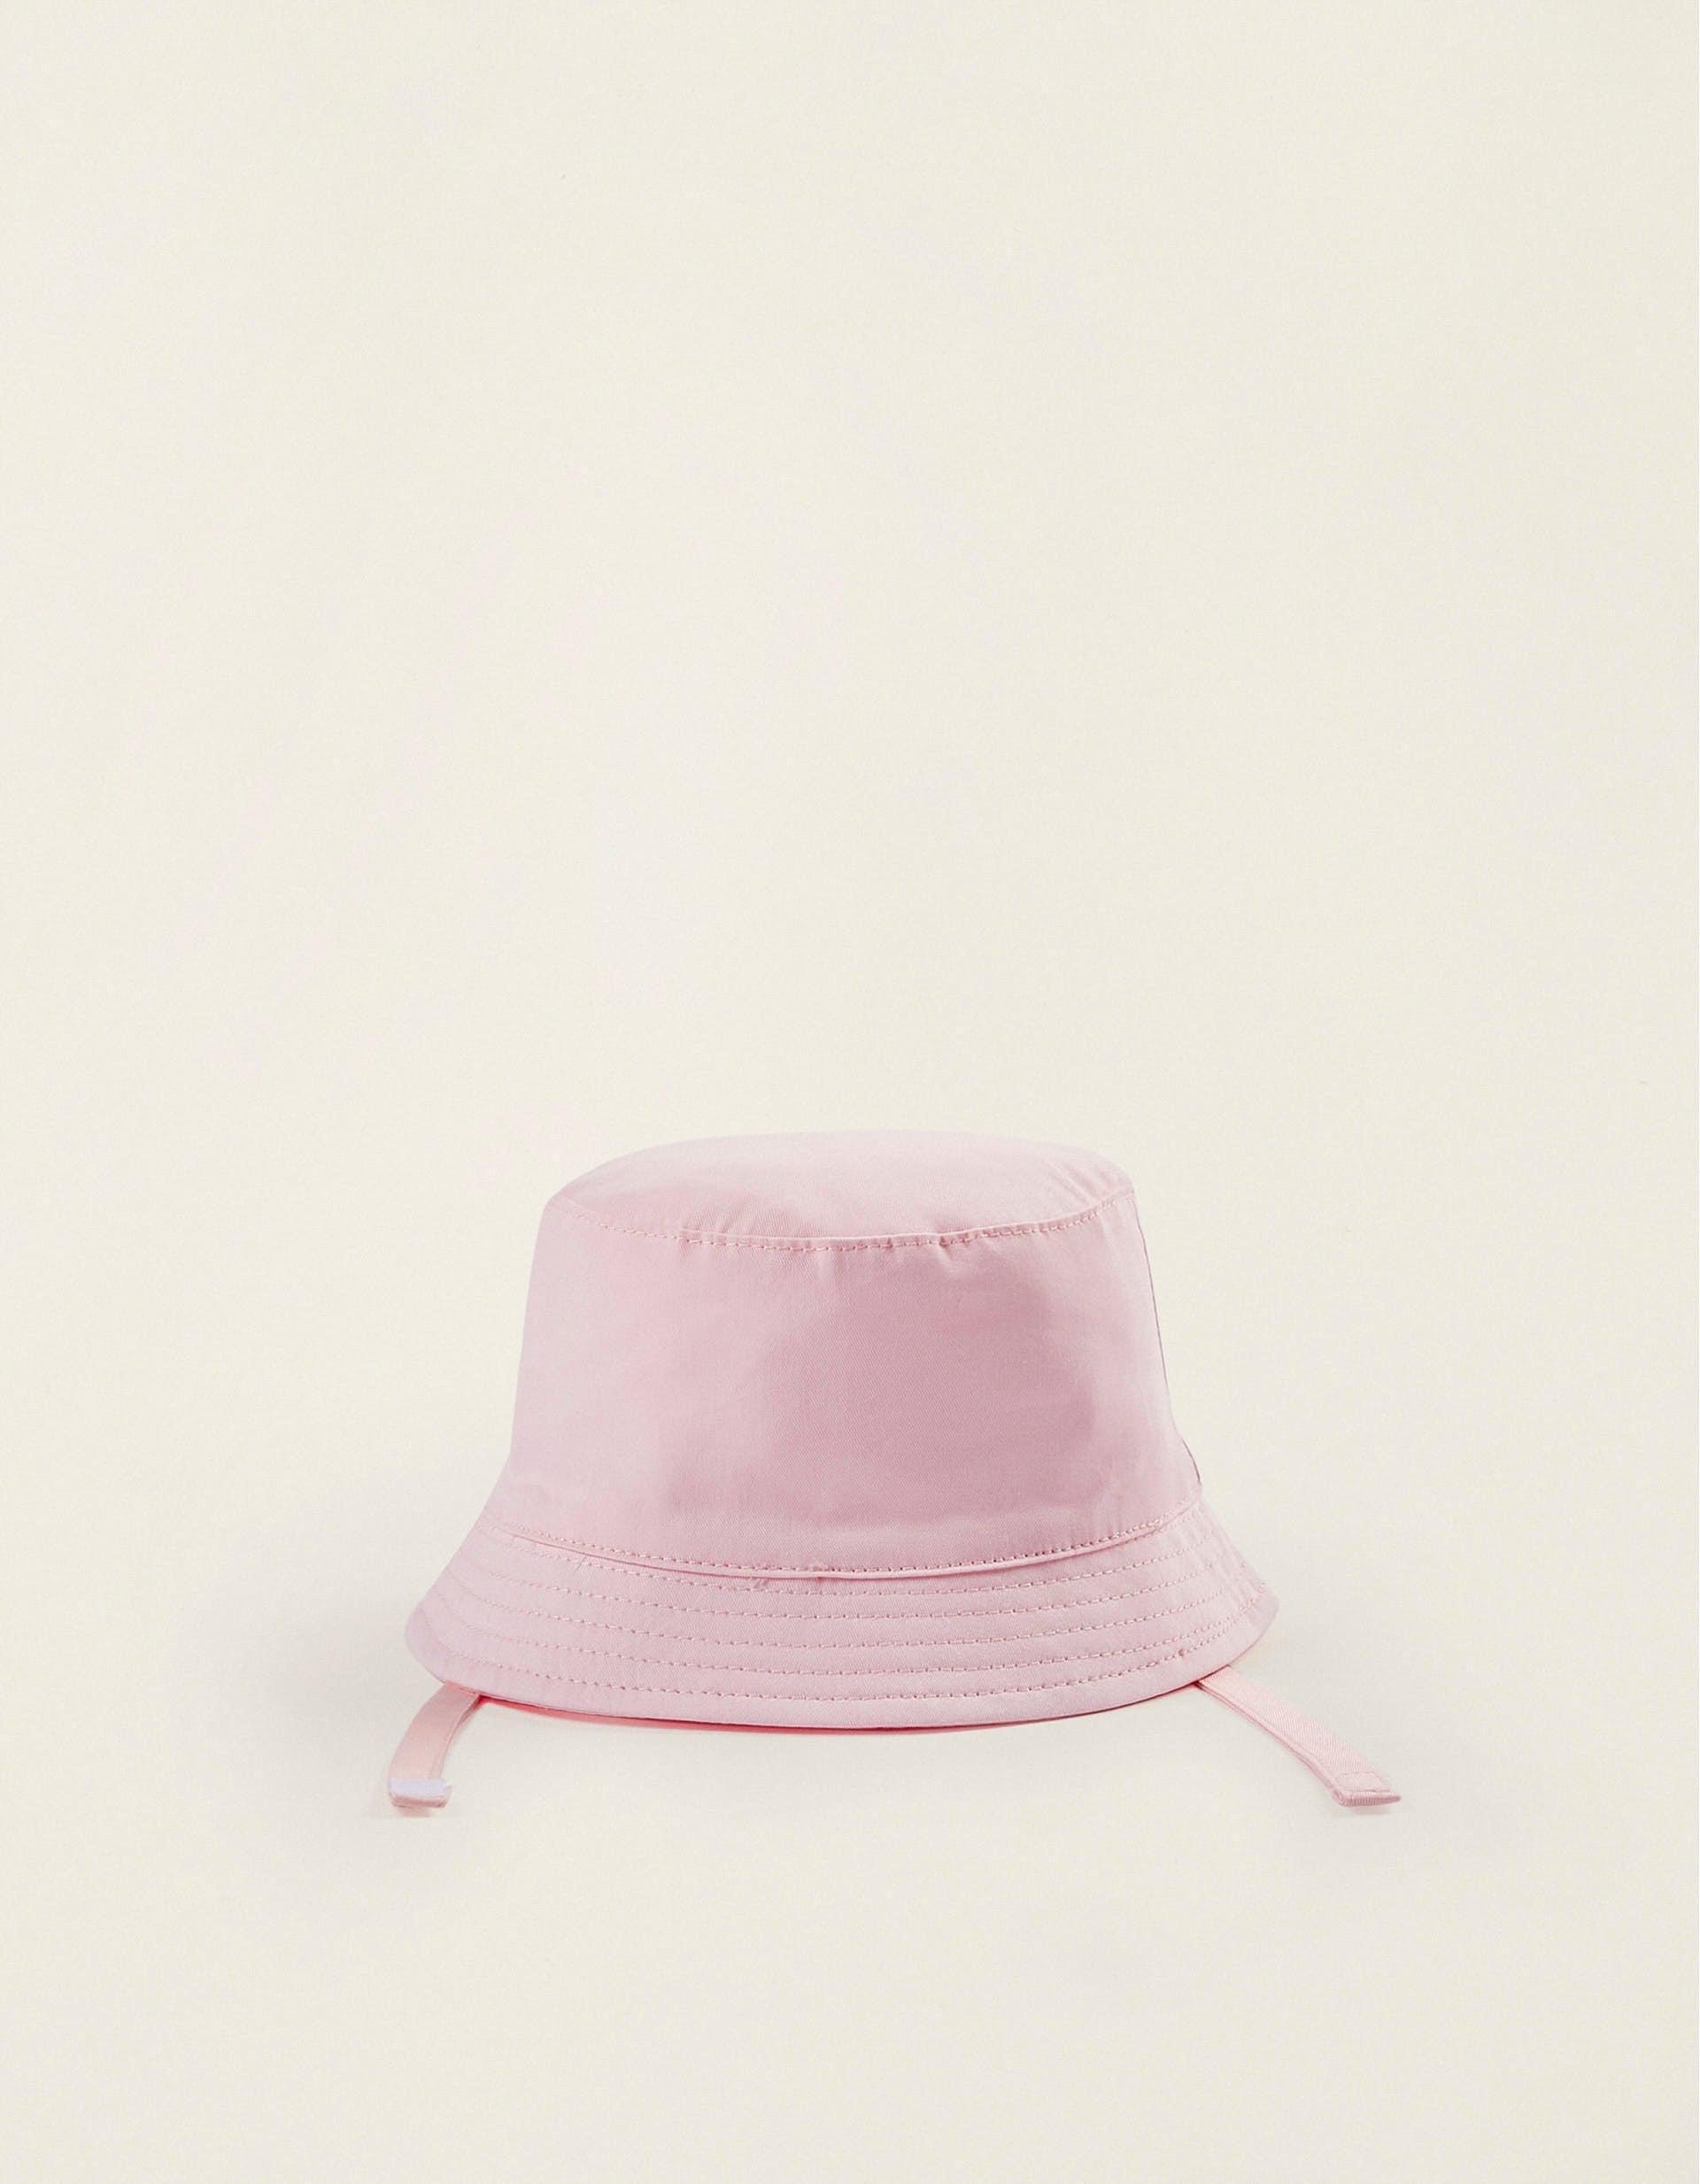 Zippy - Pink Twill Hat, Baby Unisex